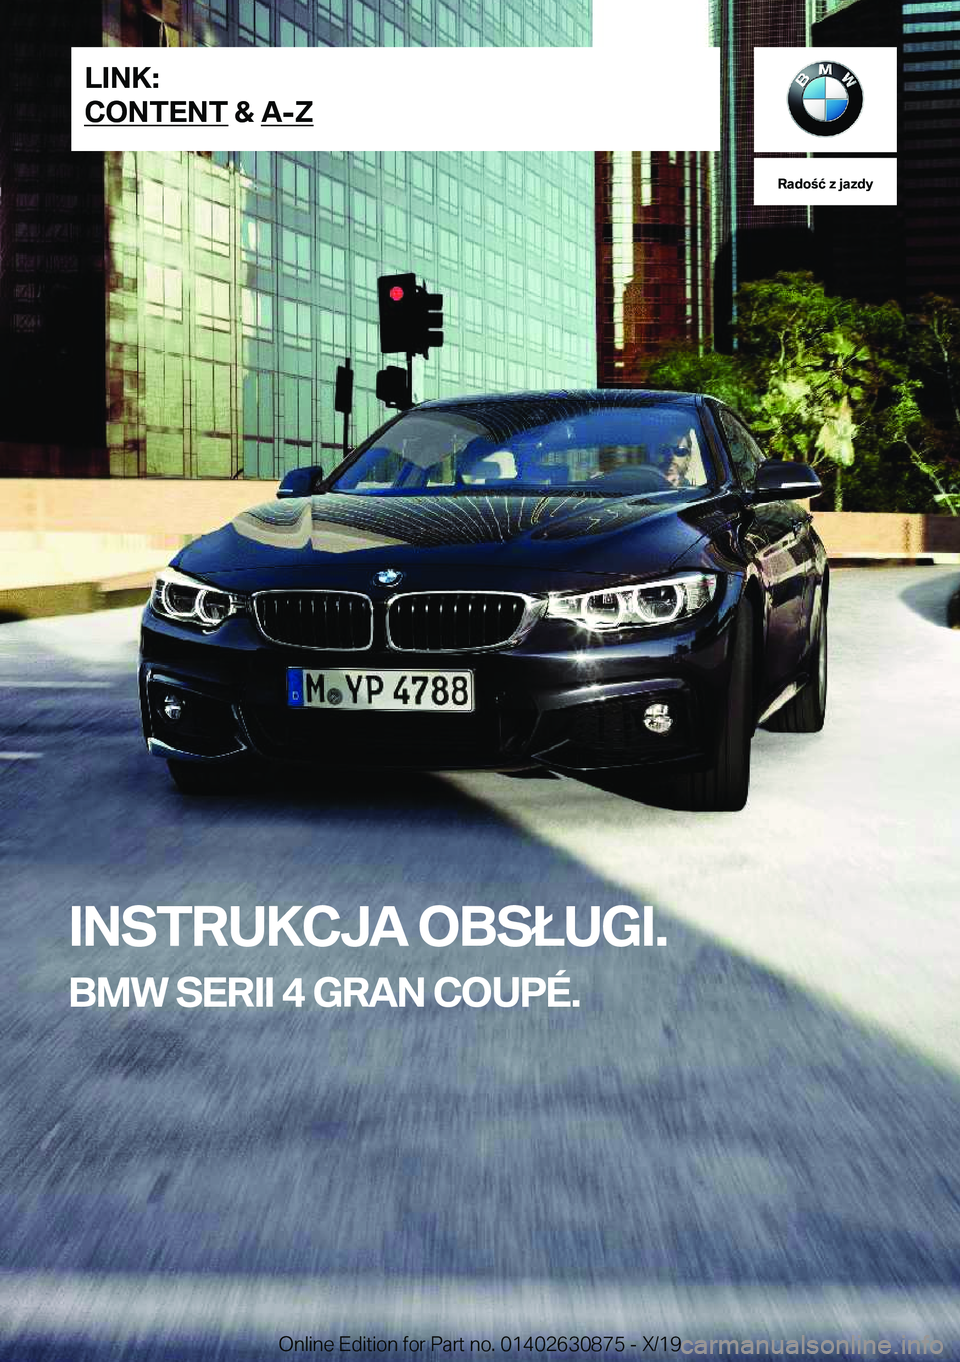 BMW 4 SERIES GRAN COUPE 2020  Instrukcja obsługi (in Polish) �R�a�d�o�ć��z��j�a�z�d�y
�I�N�S�T�R�U�K�C�J�A��O�B�S�Ł�U�G�I�.
�B�M�W��S�E�R�I�I��4��G�R�A�N��C�O�U�P�